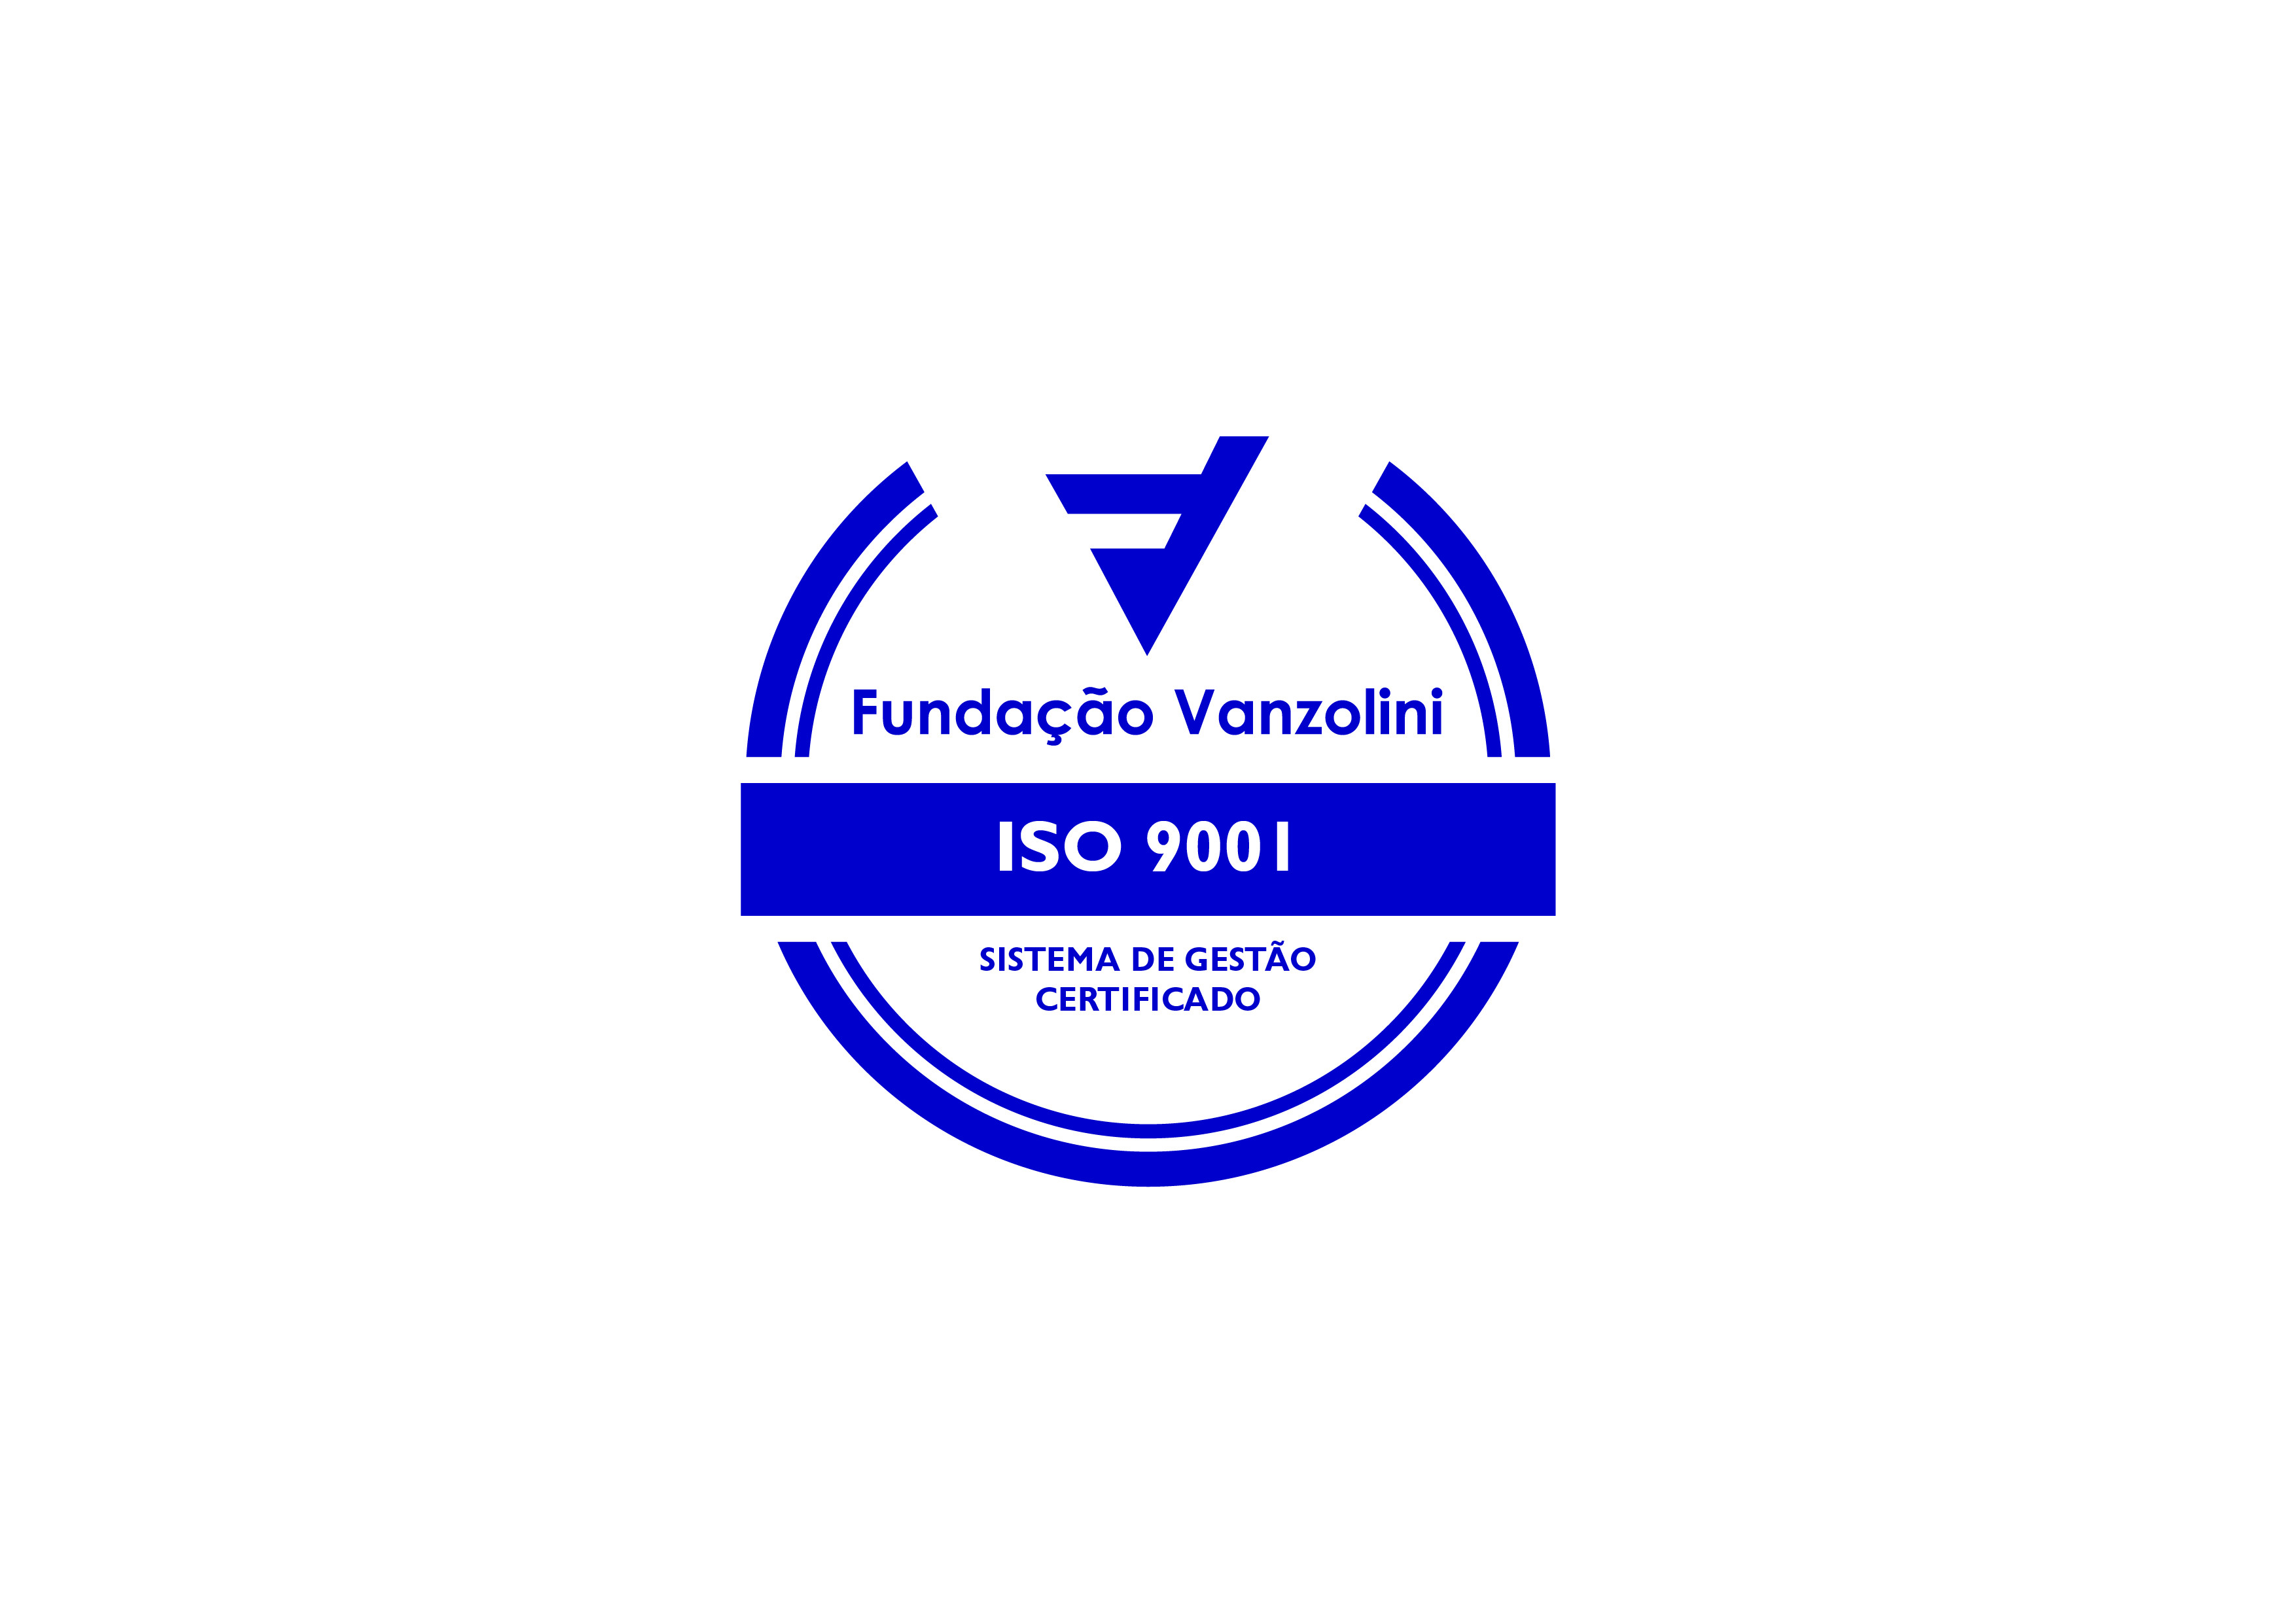 CERTIFICACIÓN IPH BRASIL: Fundação Vanzolini ISO 9001:2015, certificate SQ 22647